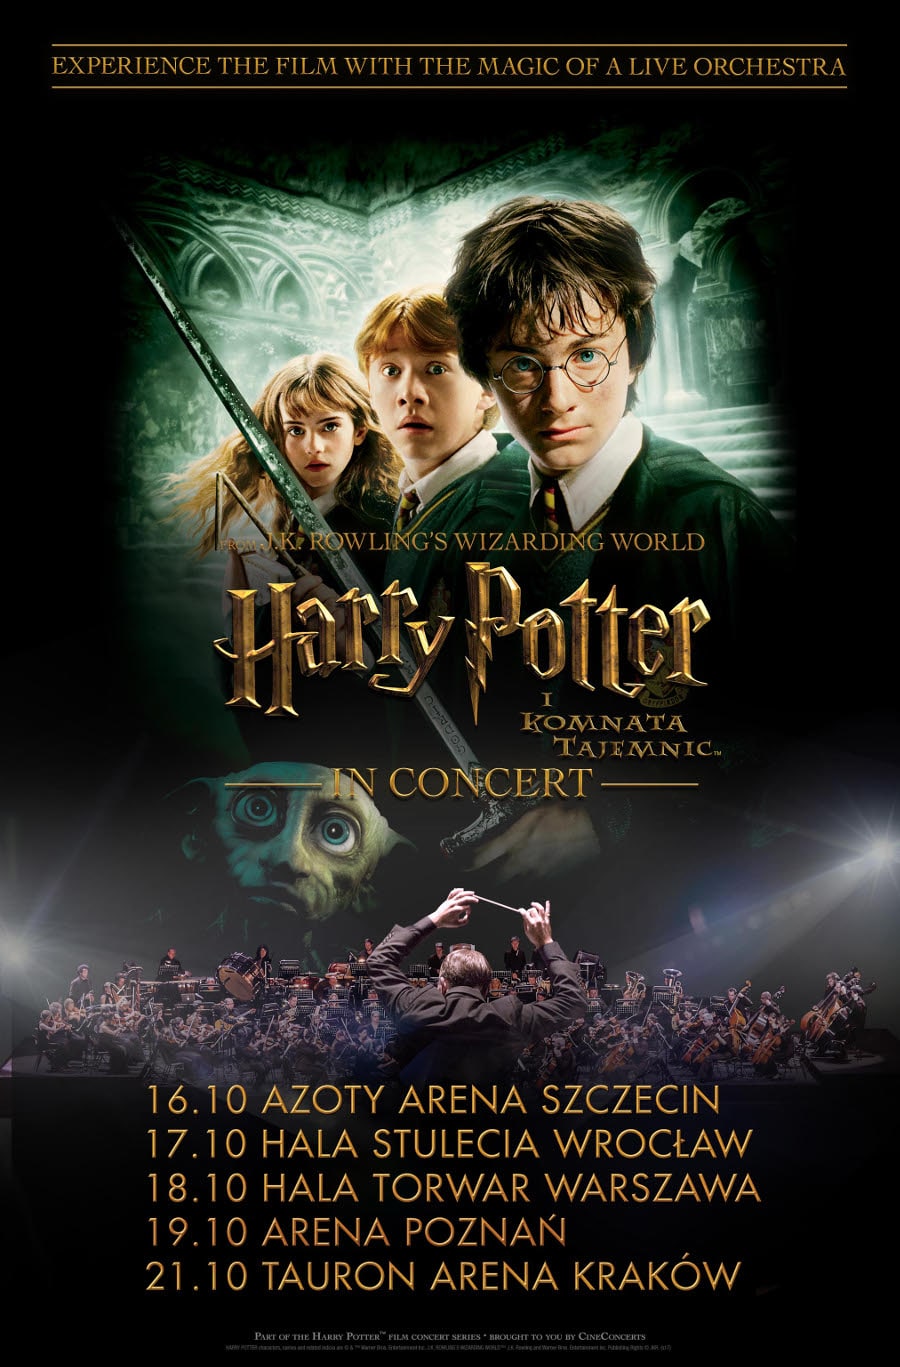 Harry Potter i Komnata Tajemnic in Concert